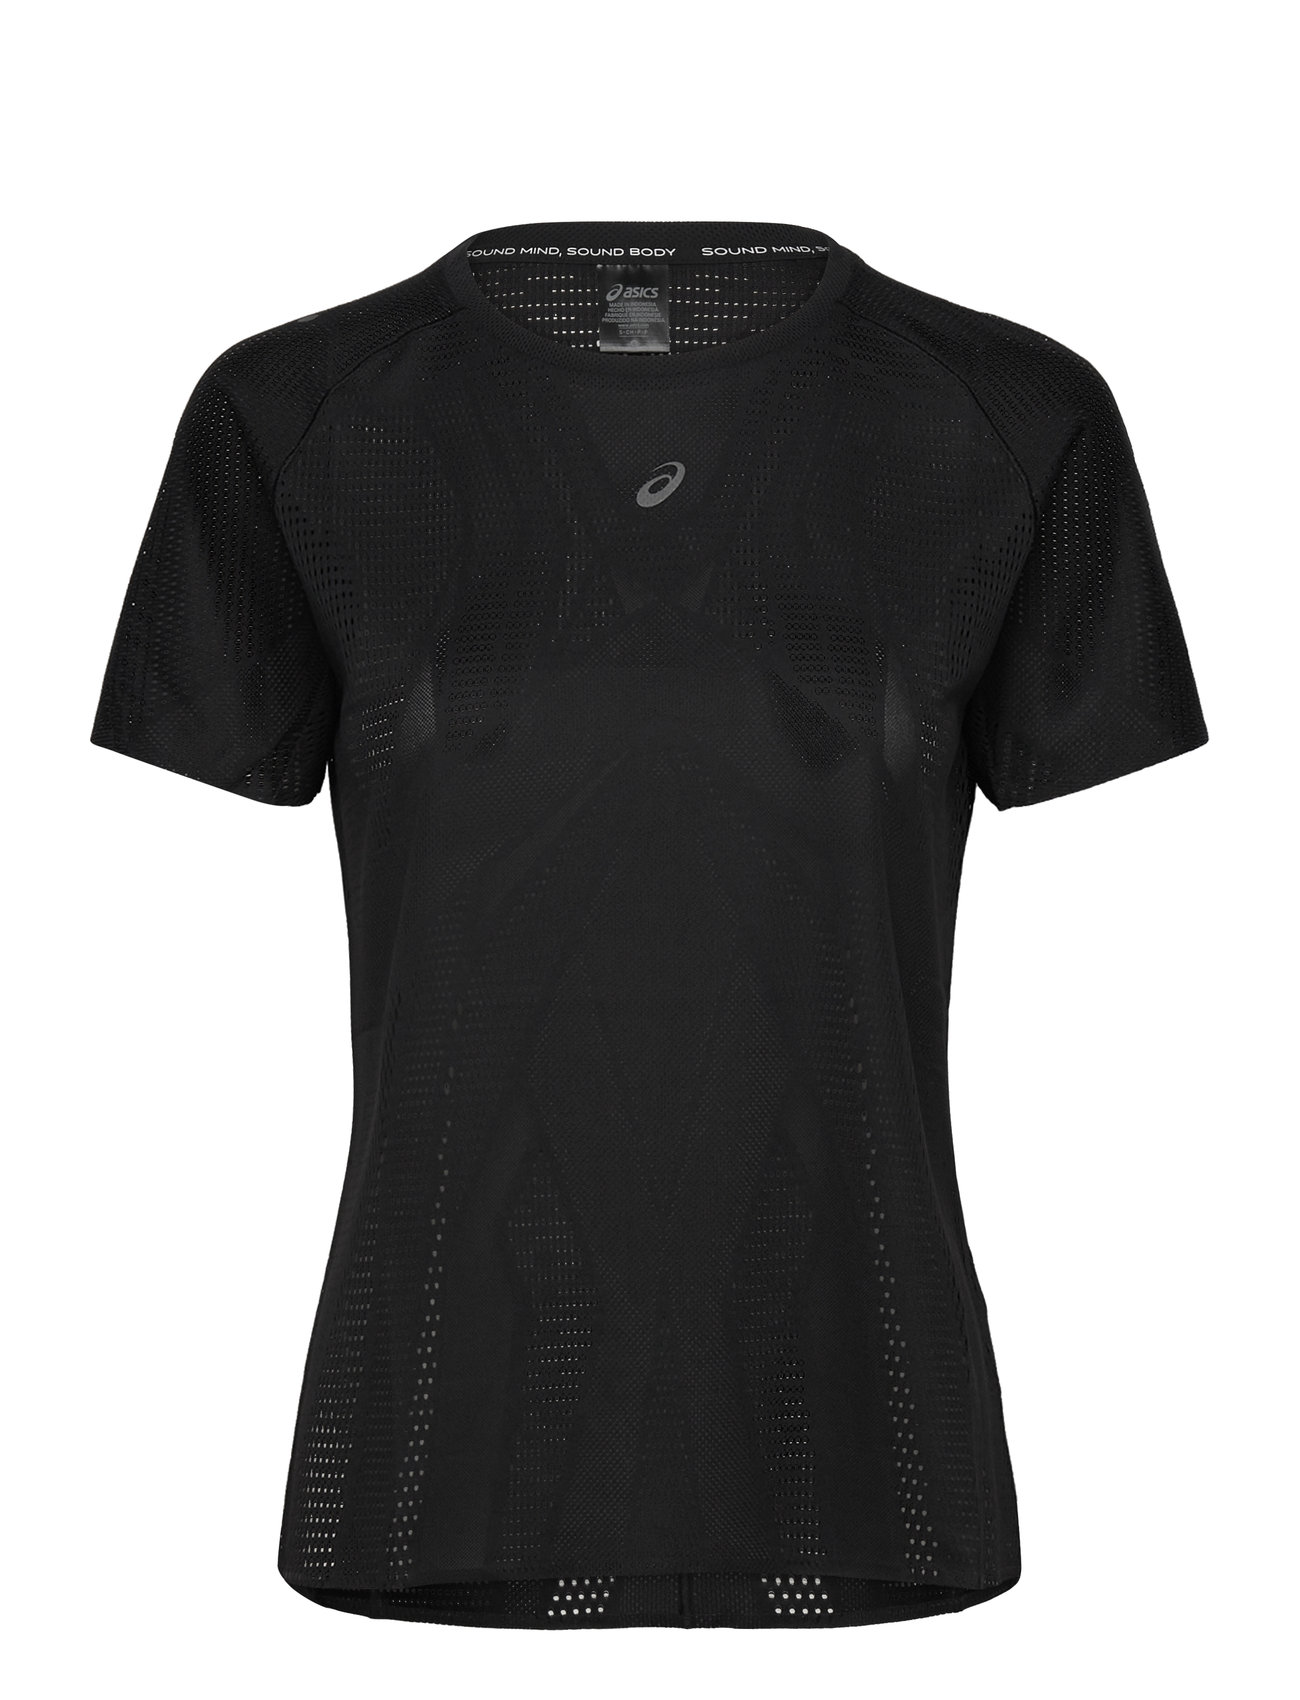 Metarun Ss Top Sport T-shirts & Tops Short-sleeved Black Asics